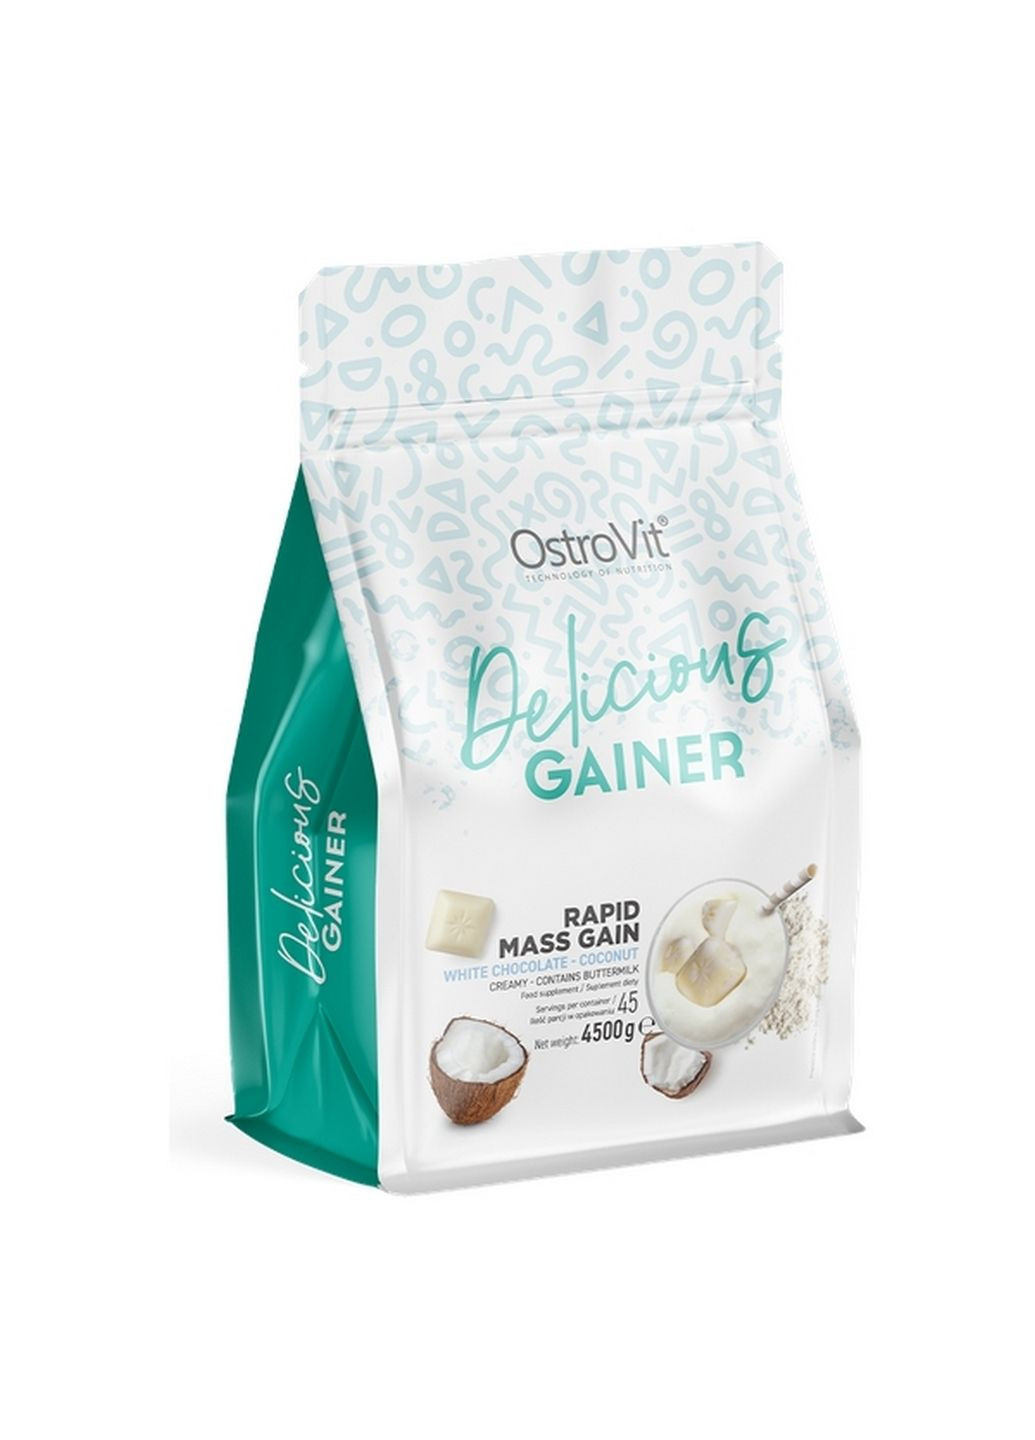 Гейнер Delicious Gainer, 4.5 кг Белый шоколад-кокос Ostrovit (293341314)